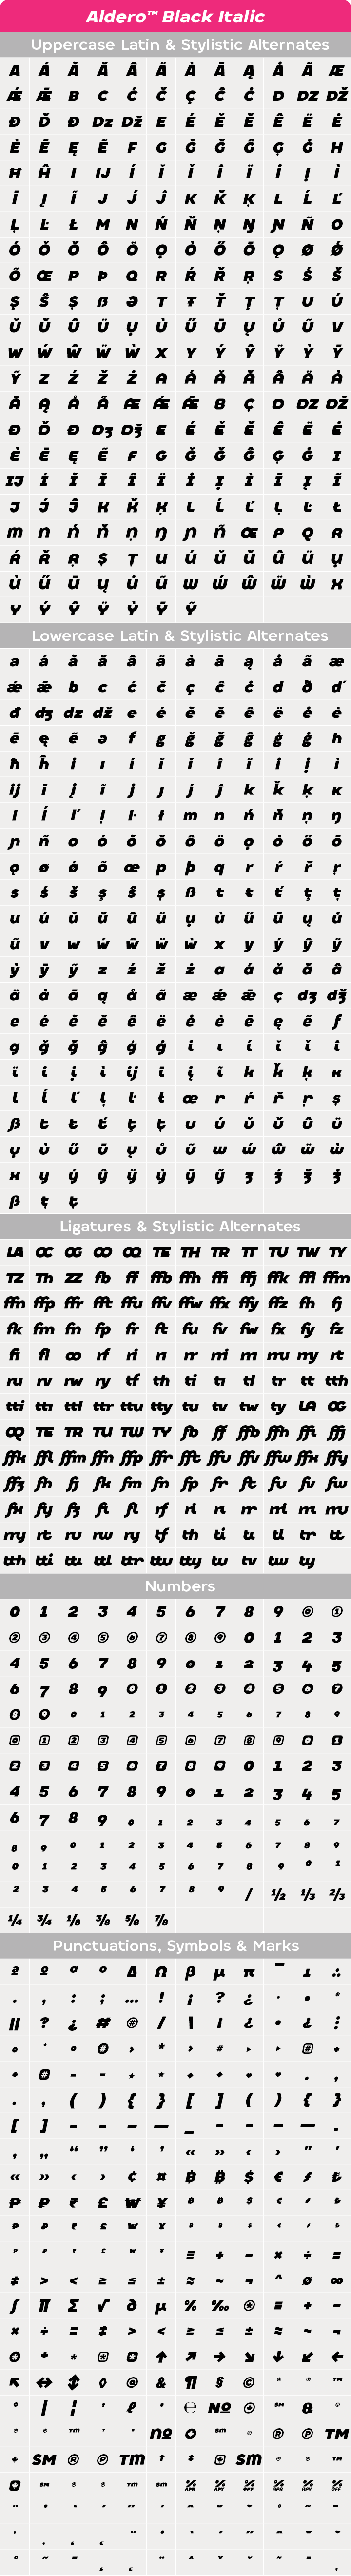 Aldero Black Italic Glyphs Table10.png